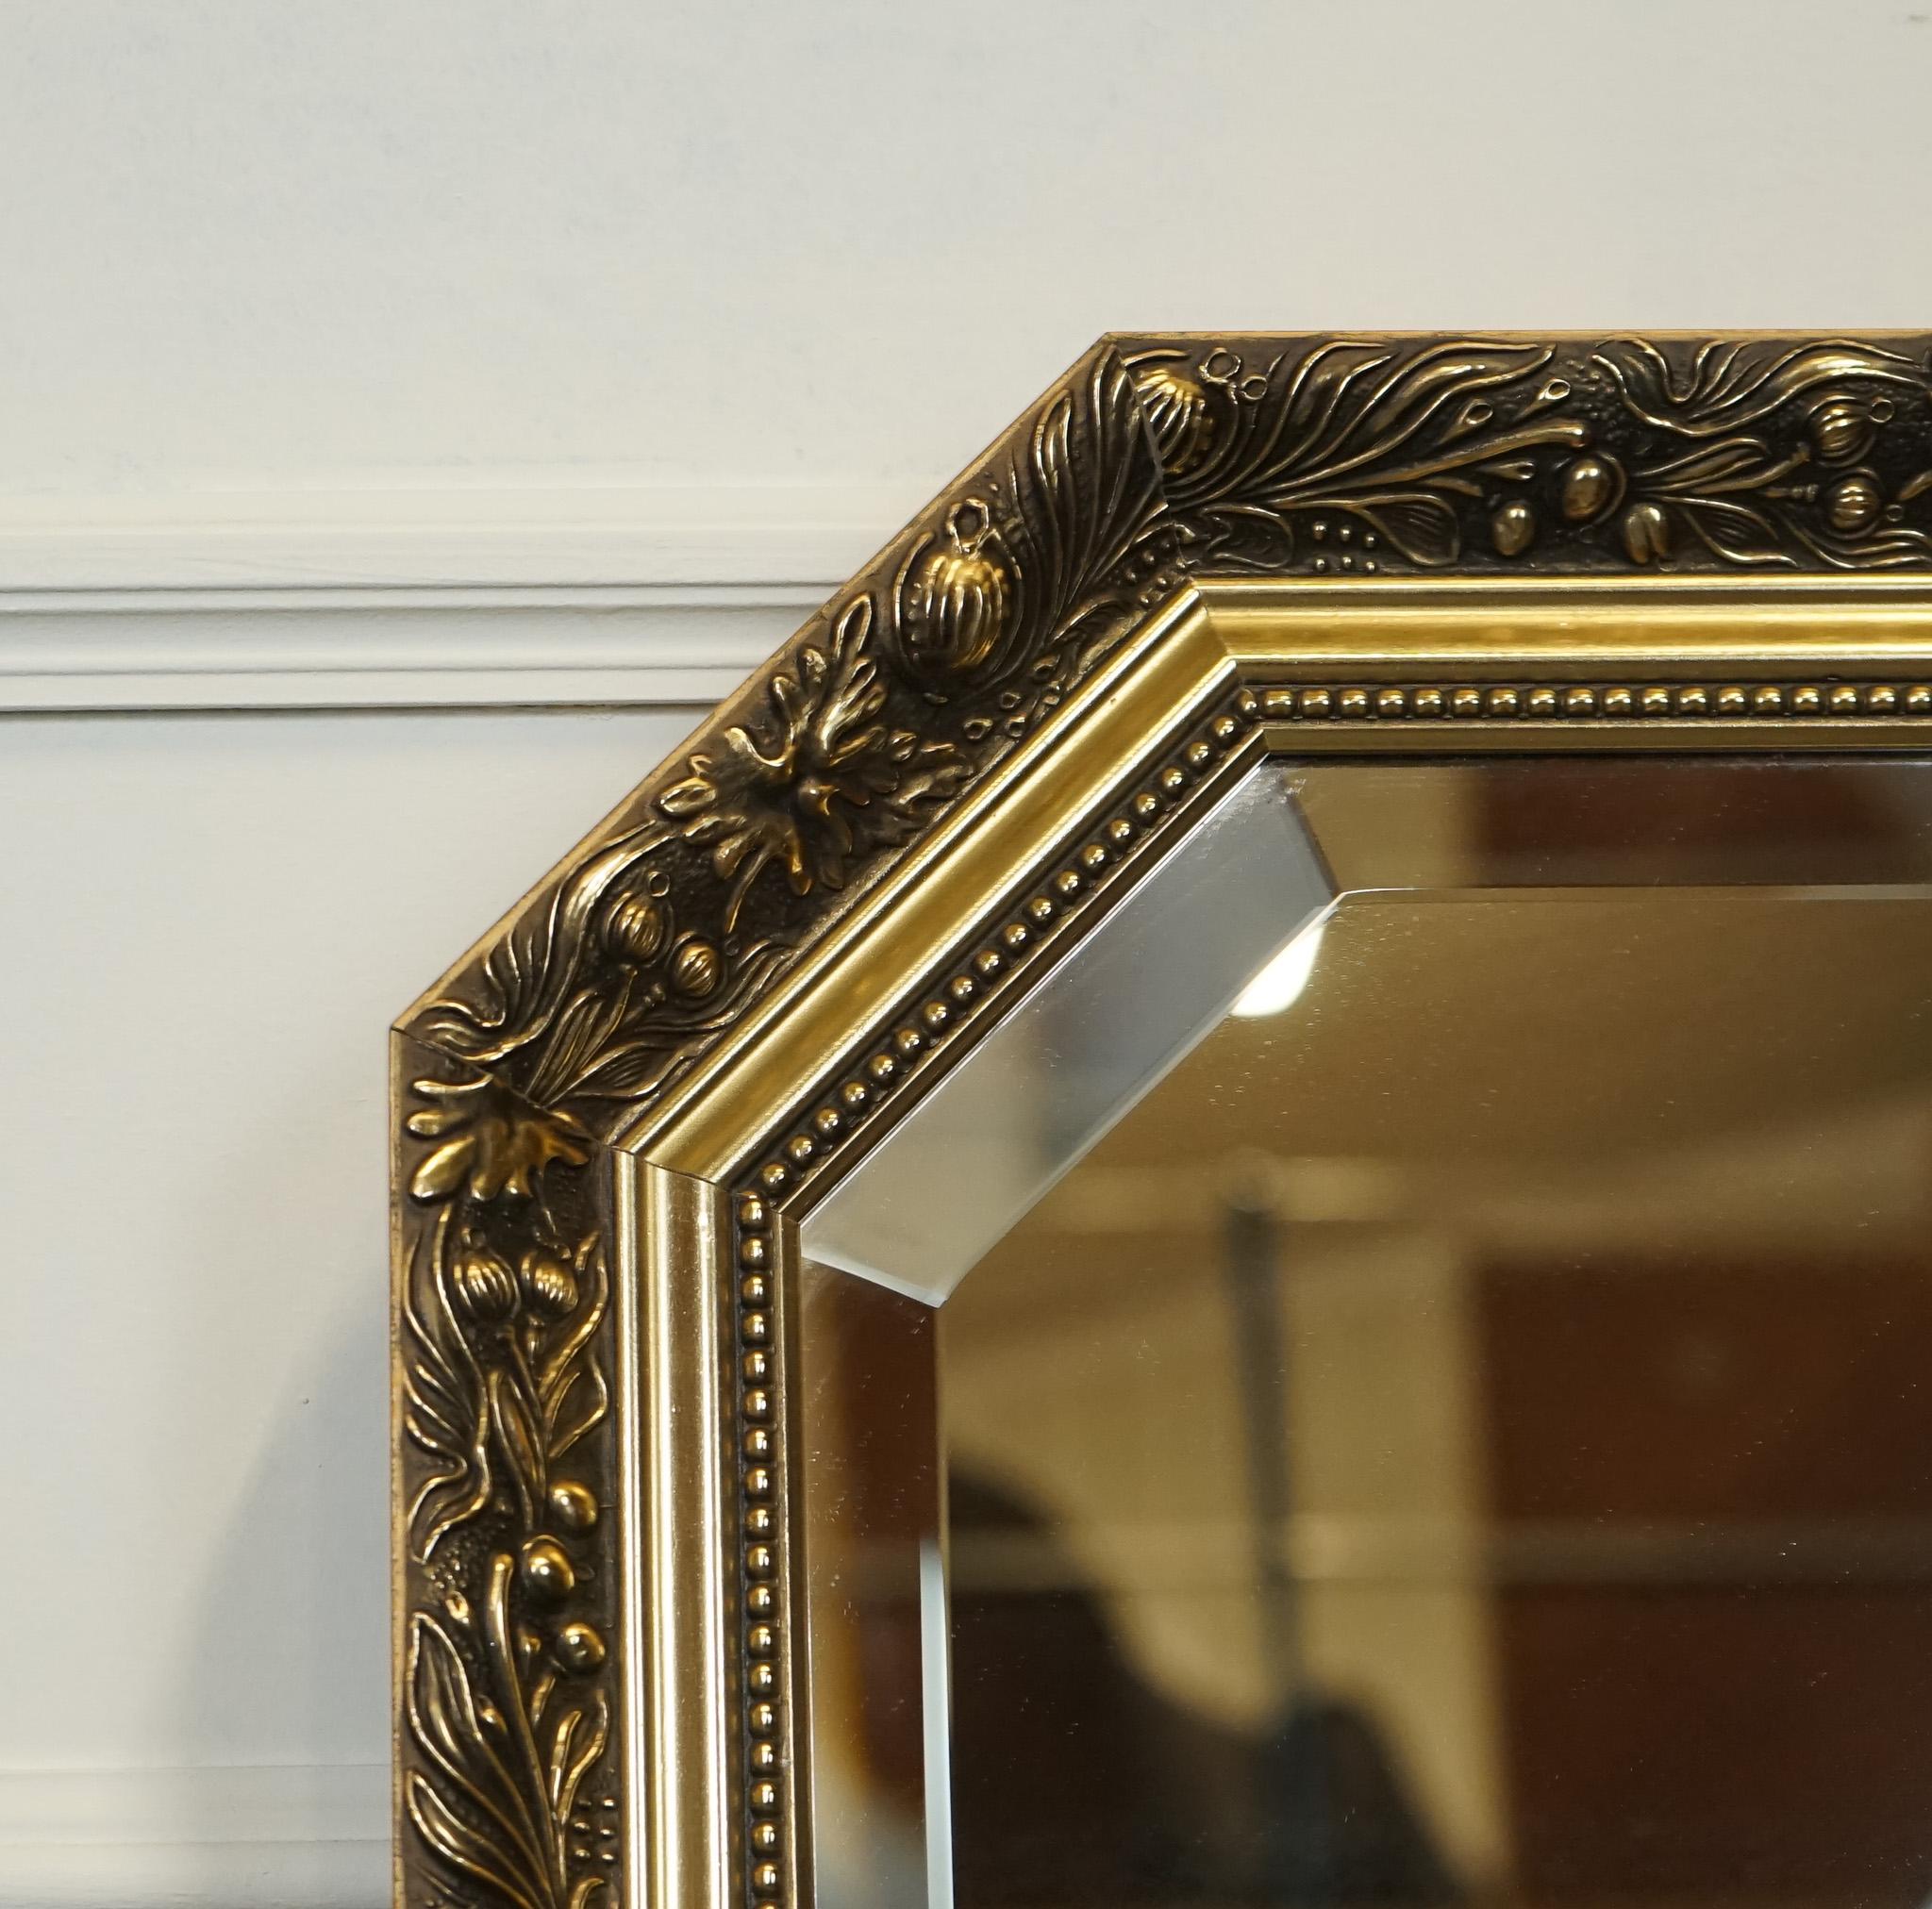 Mirror VINTAGE GOLD ORNATE WALL MIRROR LOVELY CARVED DETAILS j1 For Sale